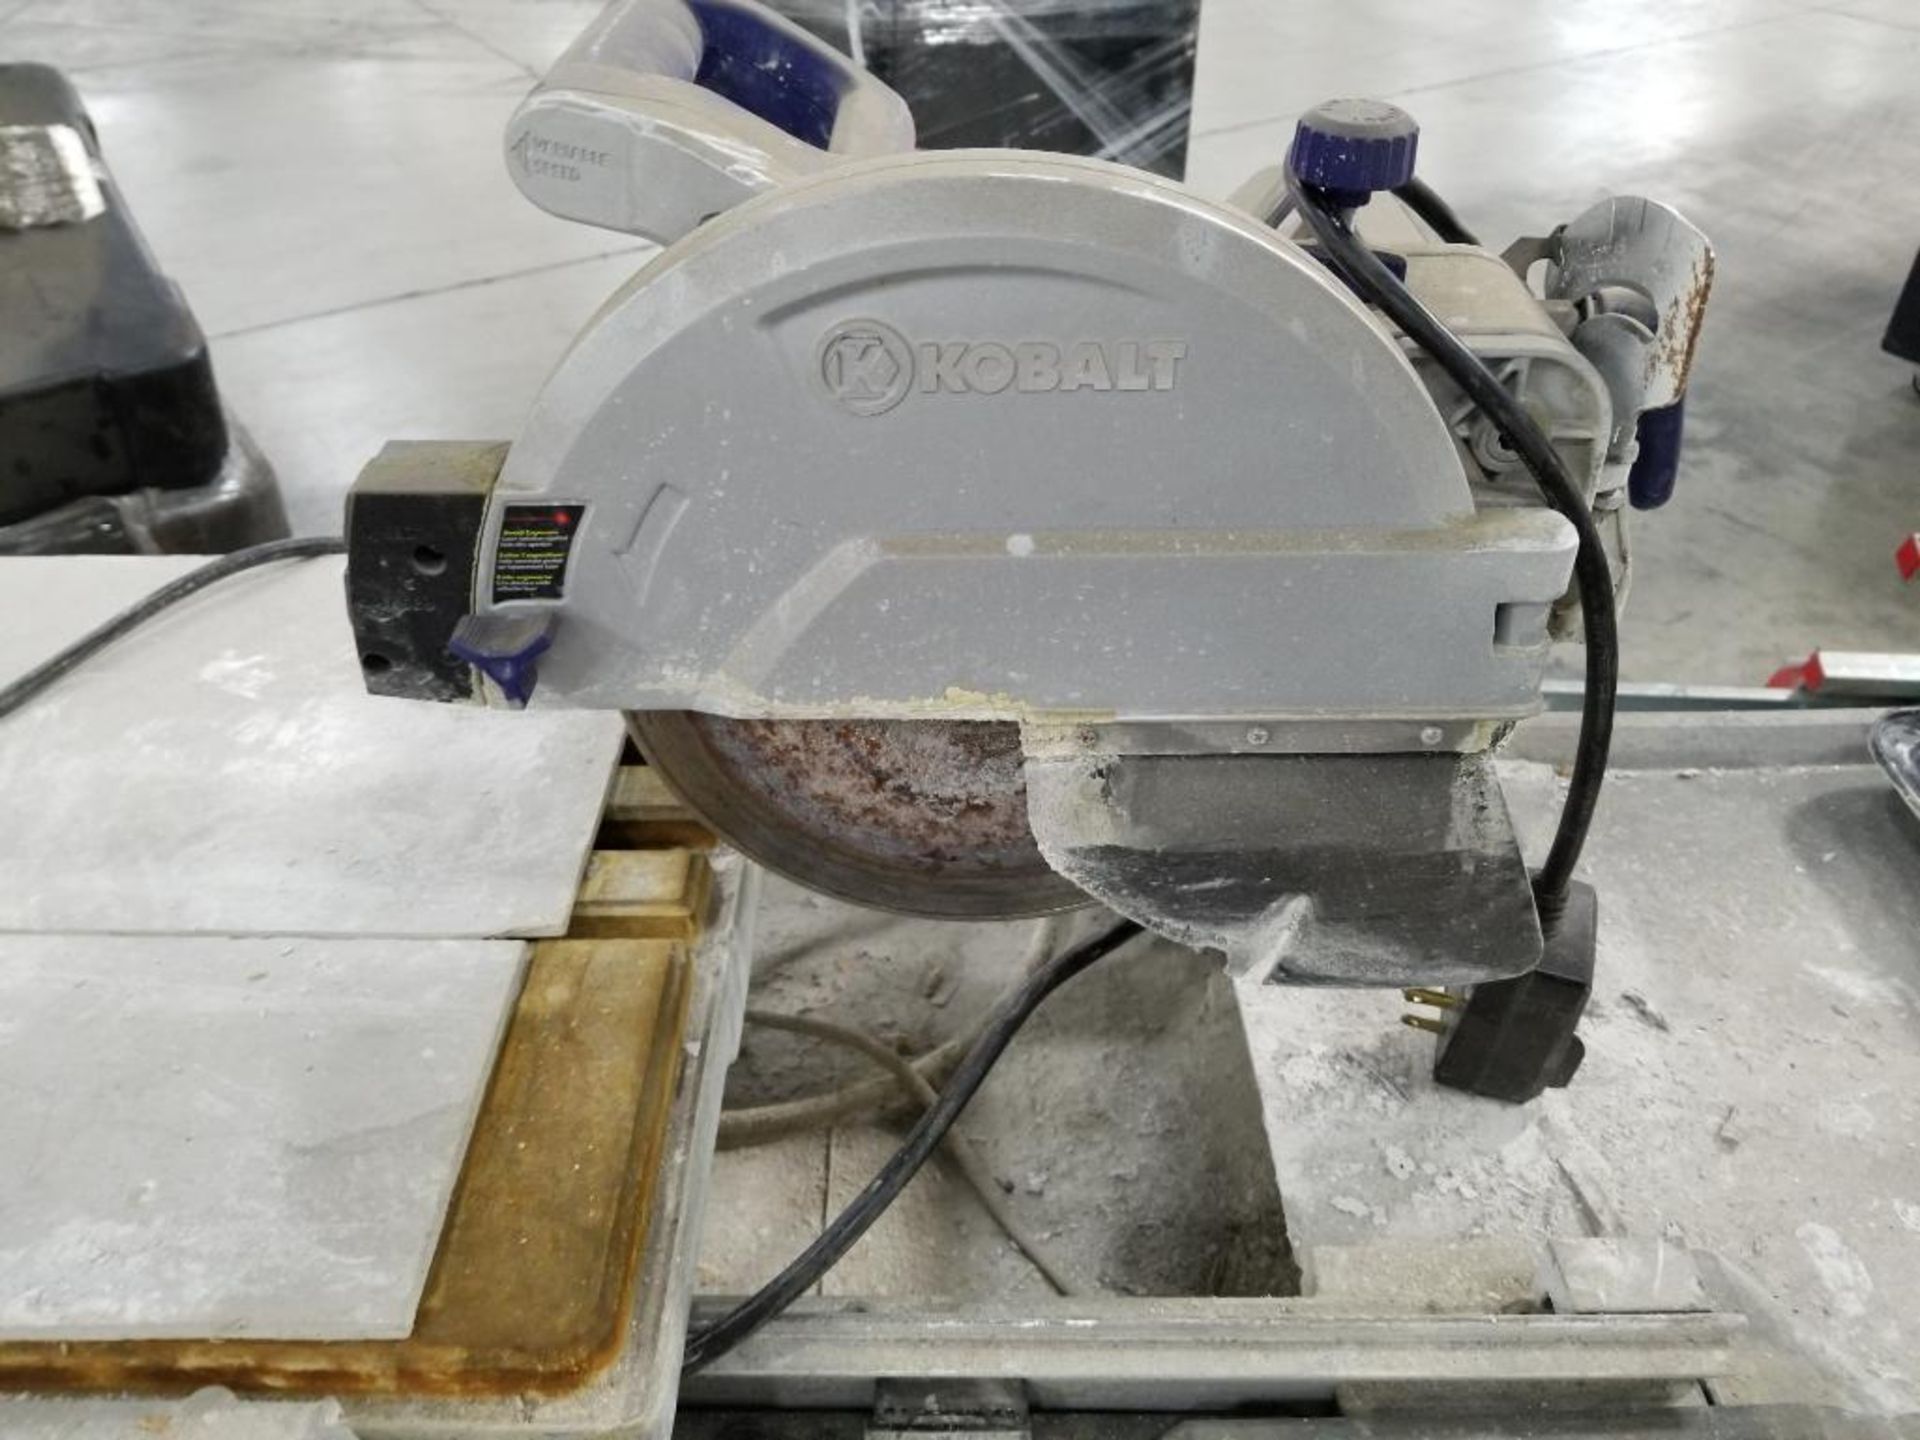 Kobalt tile saw. - Image 9 of 18